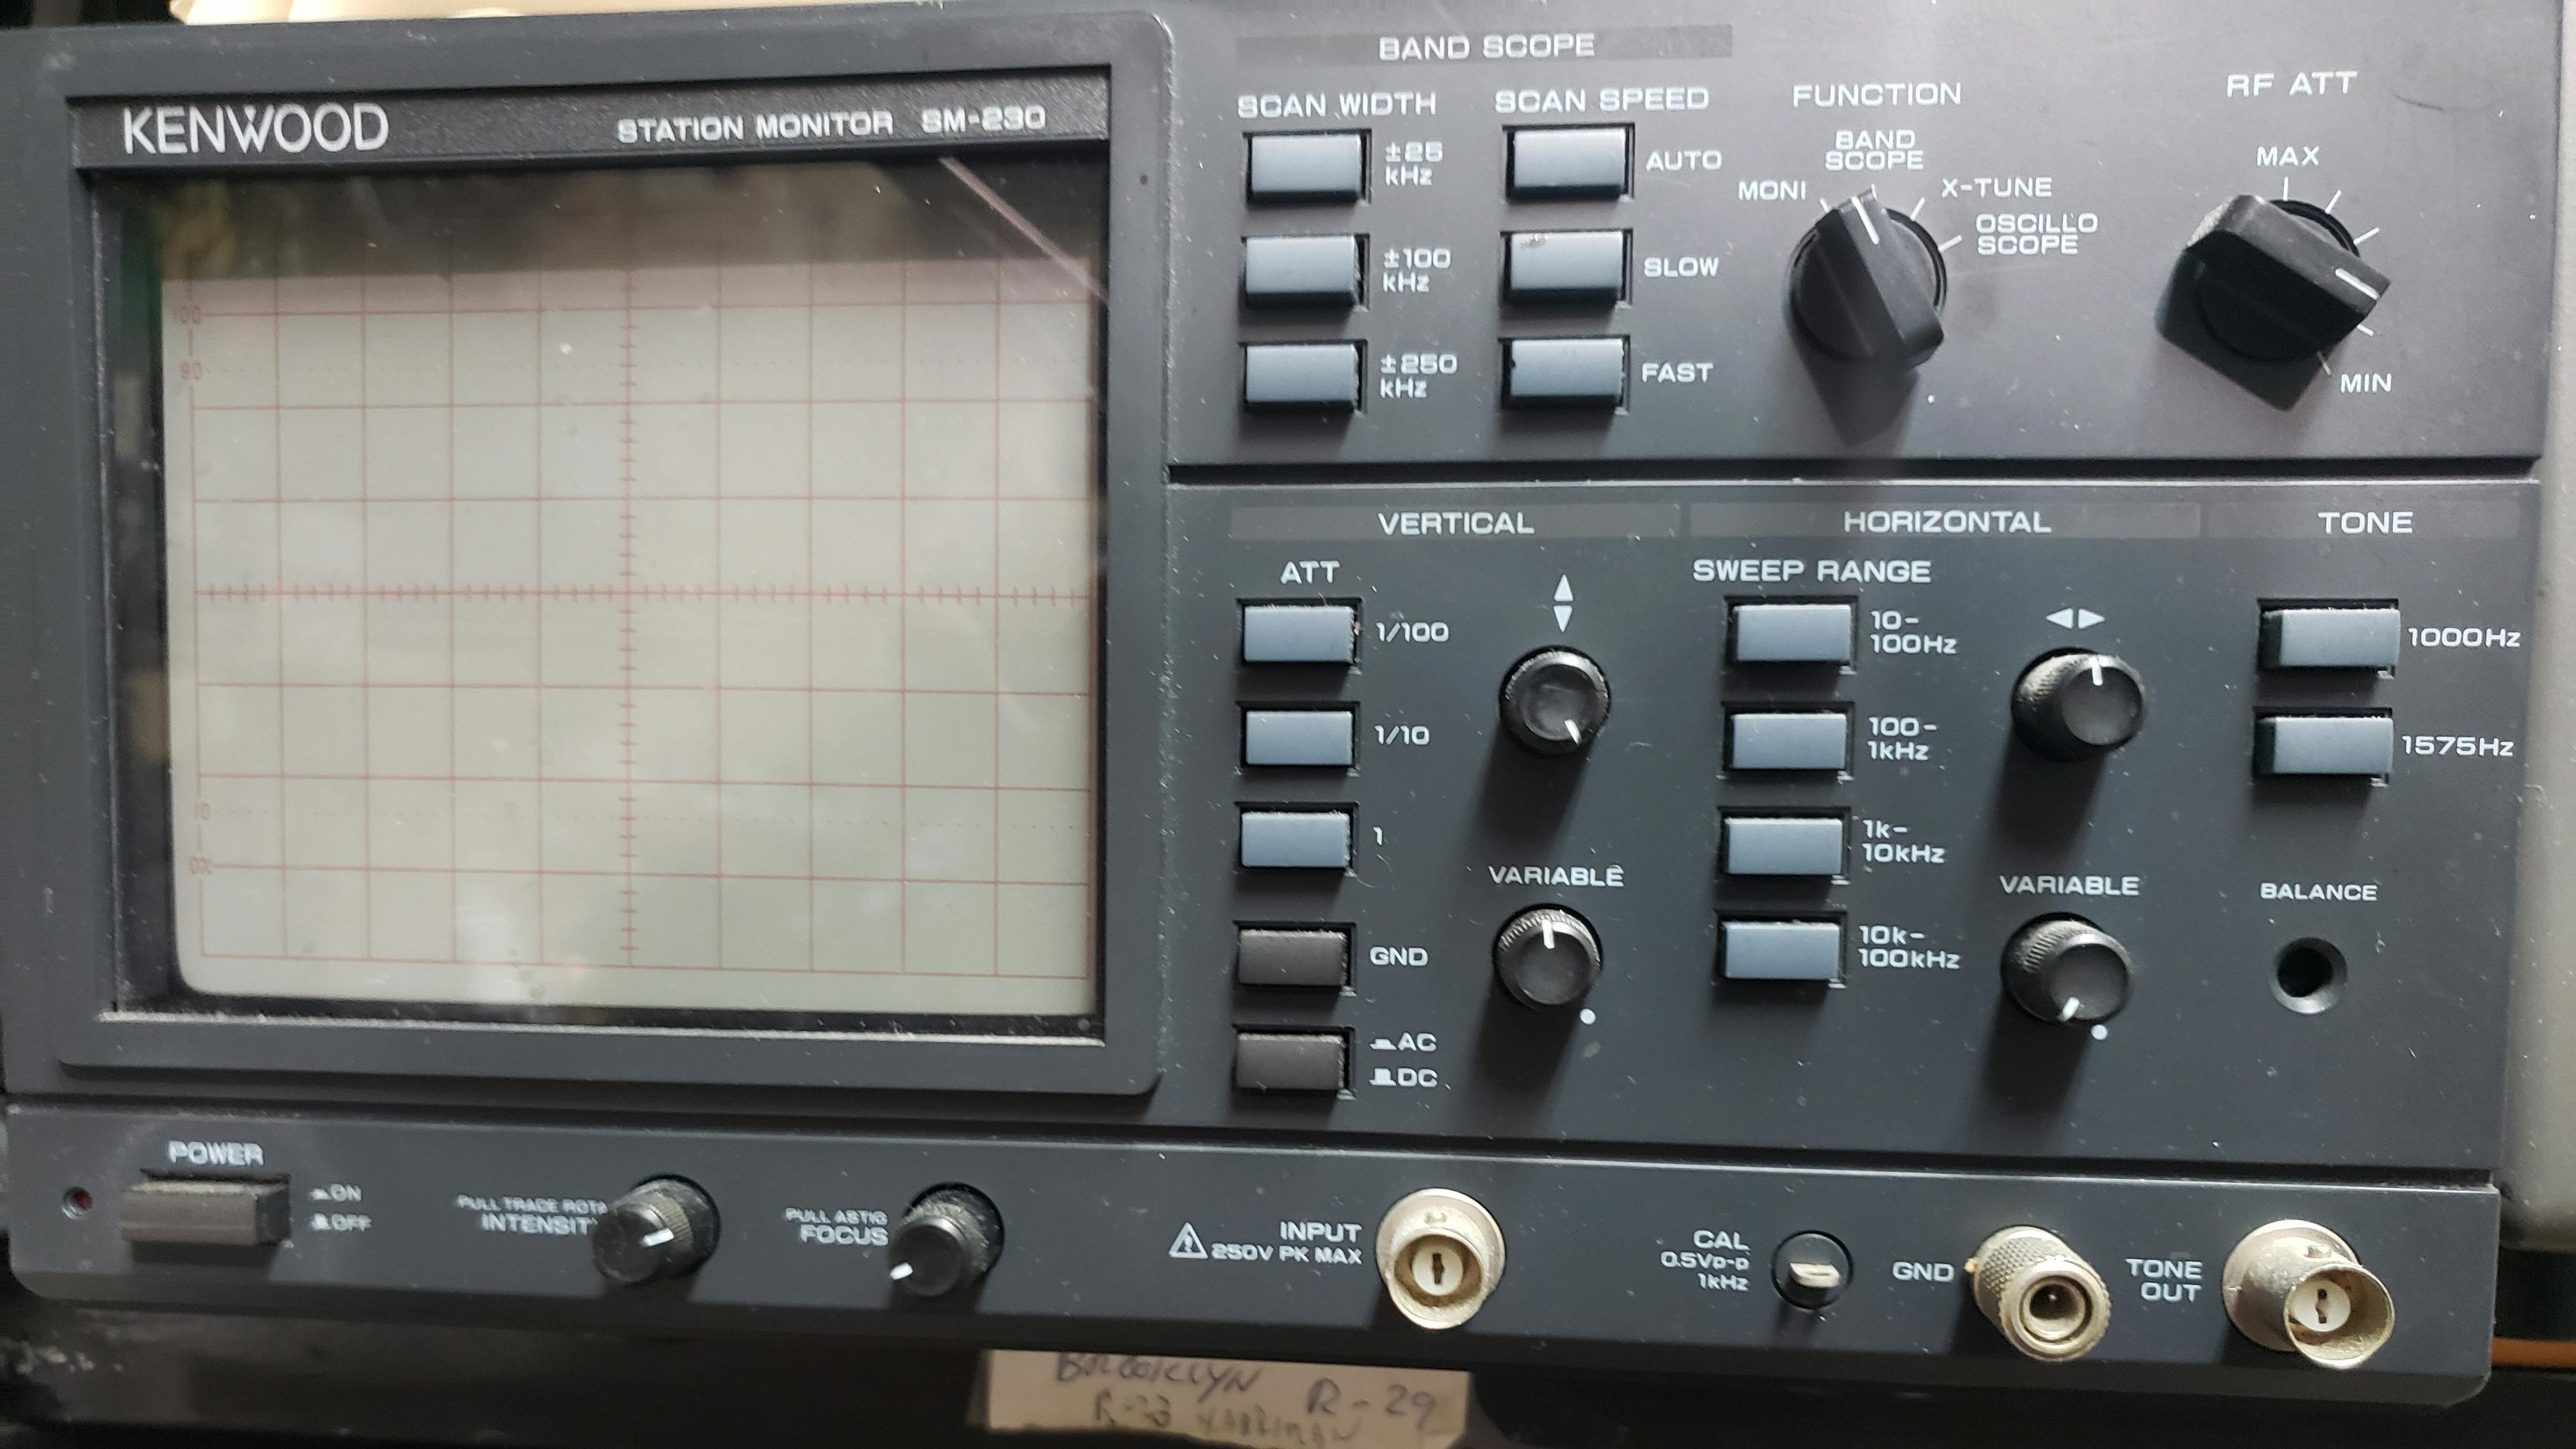 Kenwood SM-230 Station Monitor Oscilloscope (rear view)